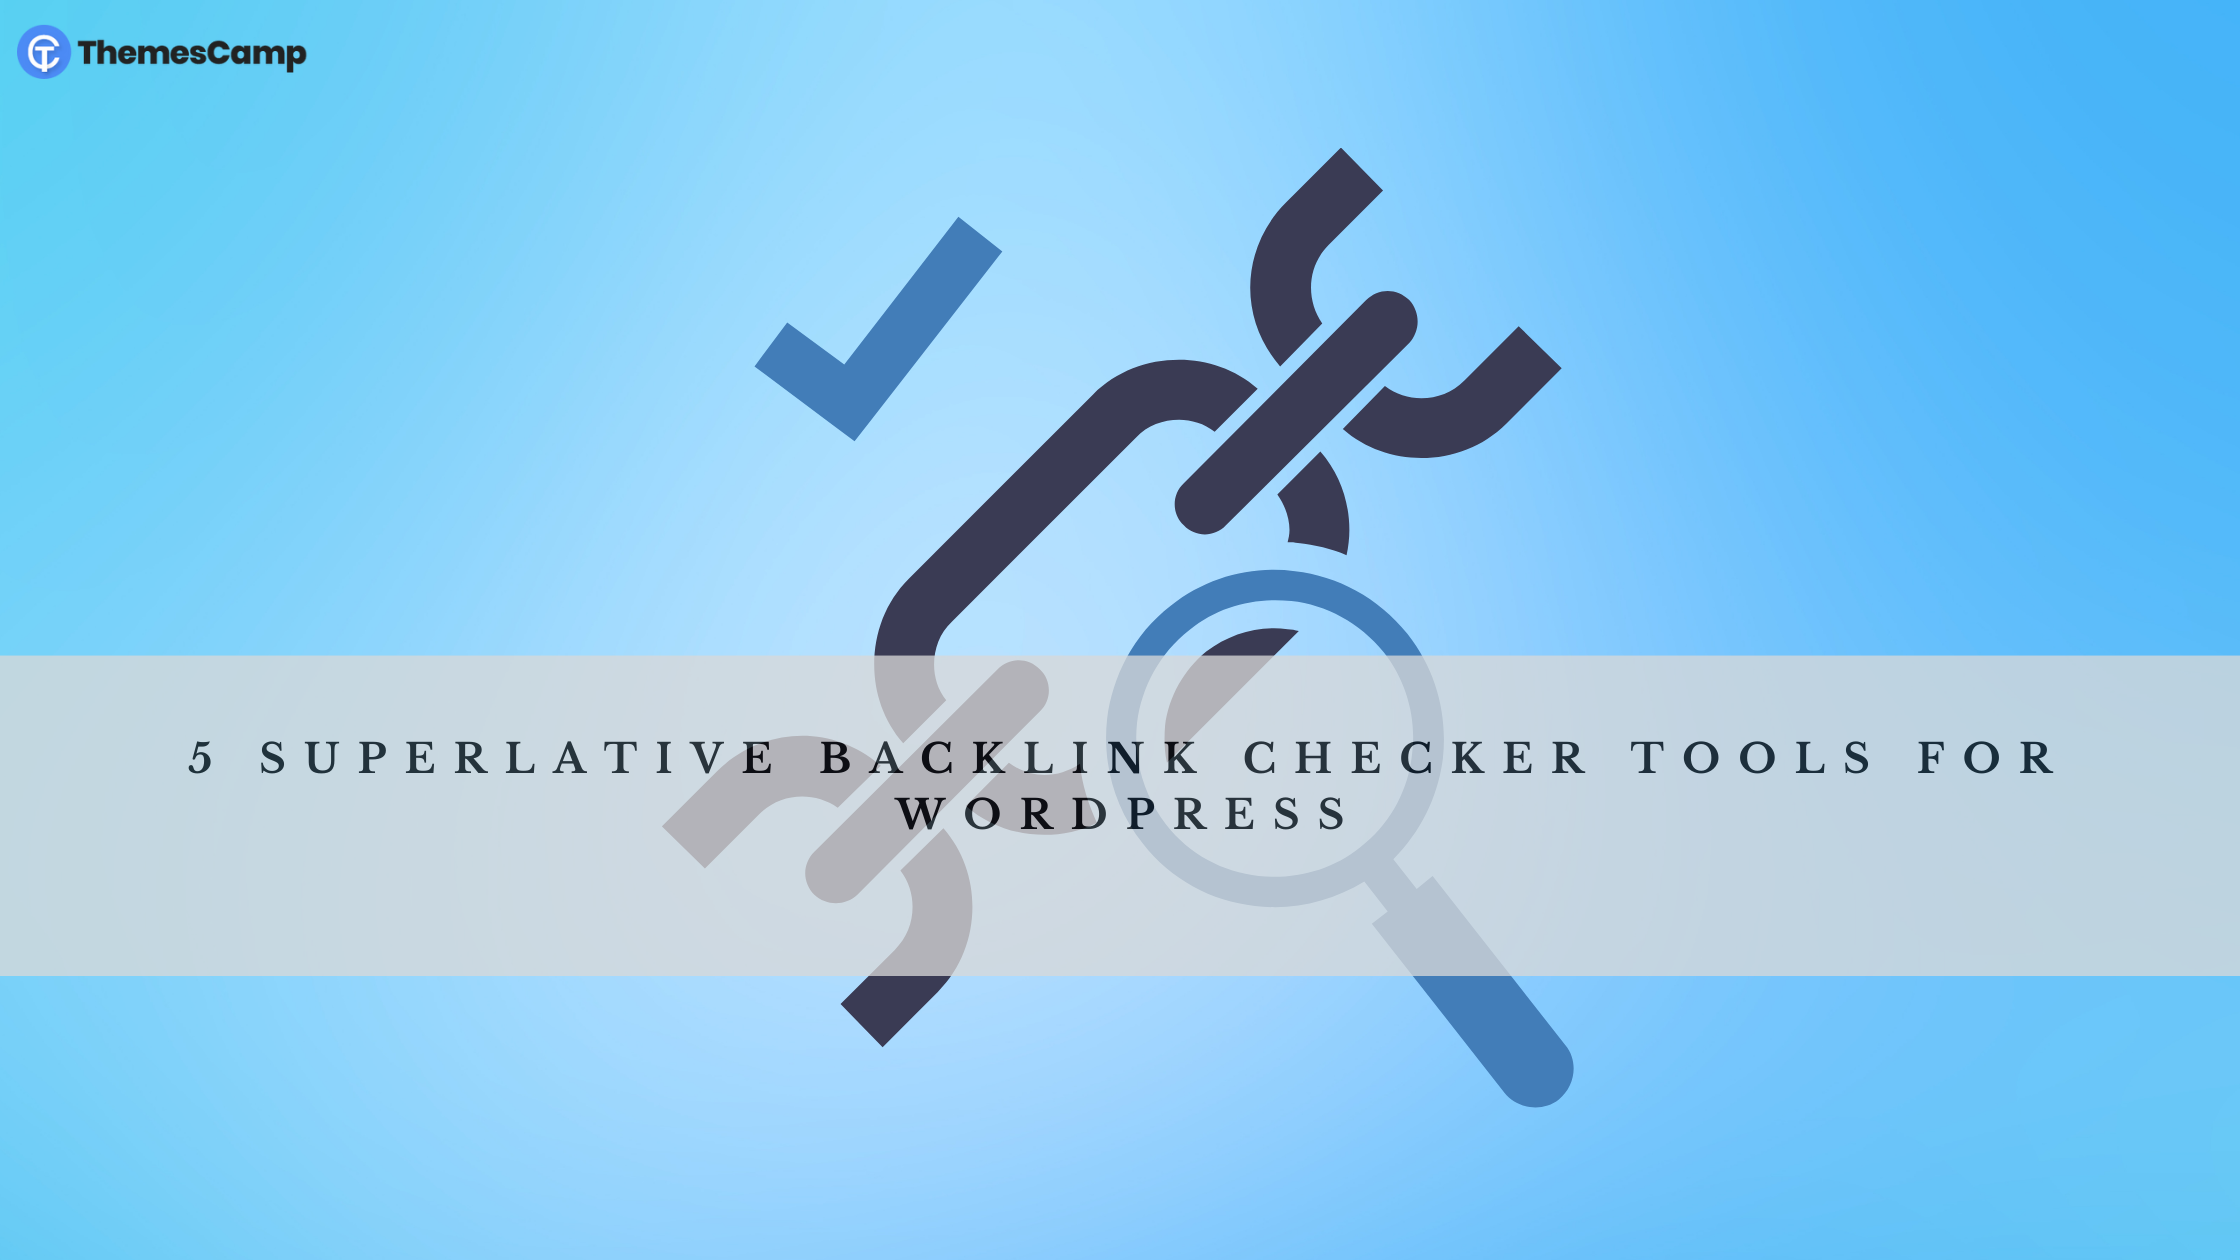 5 Superlative Backlink Checker Tools for WordPress